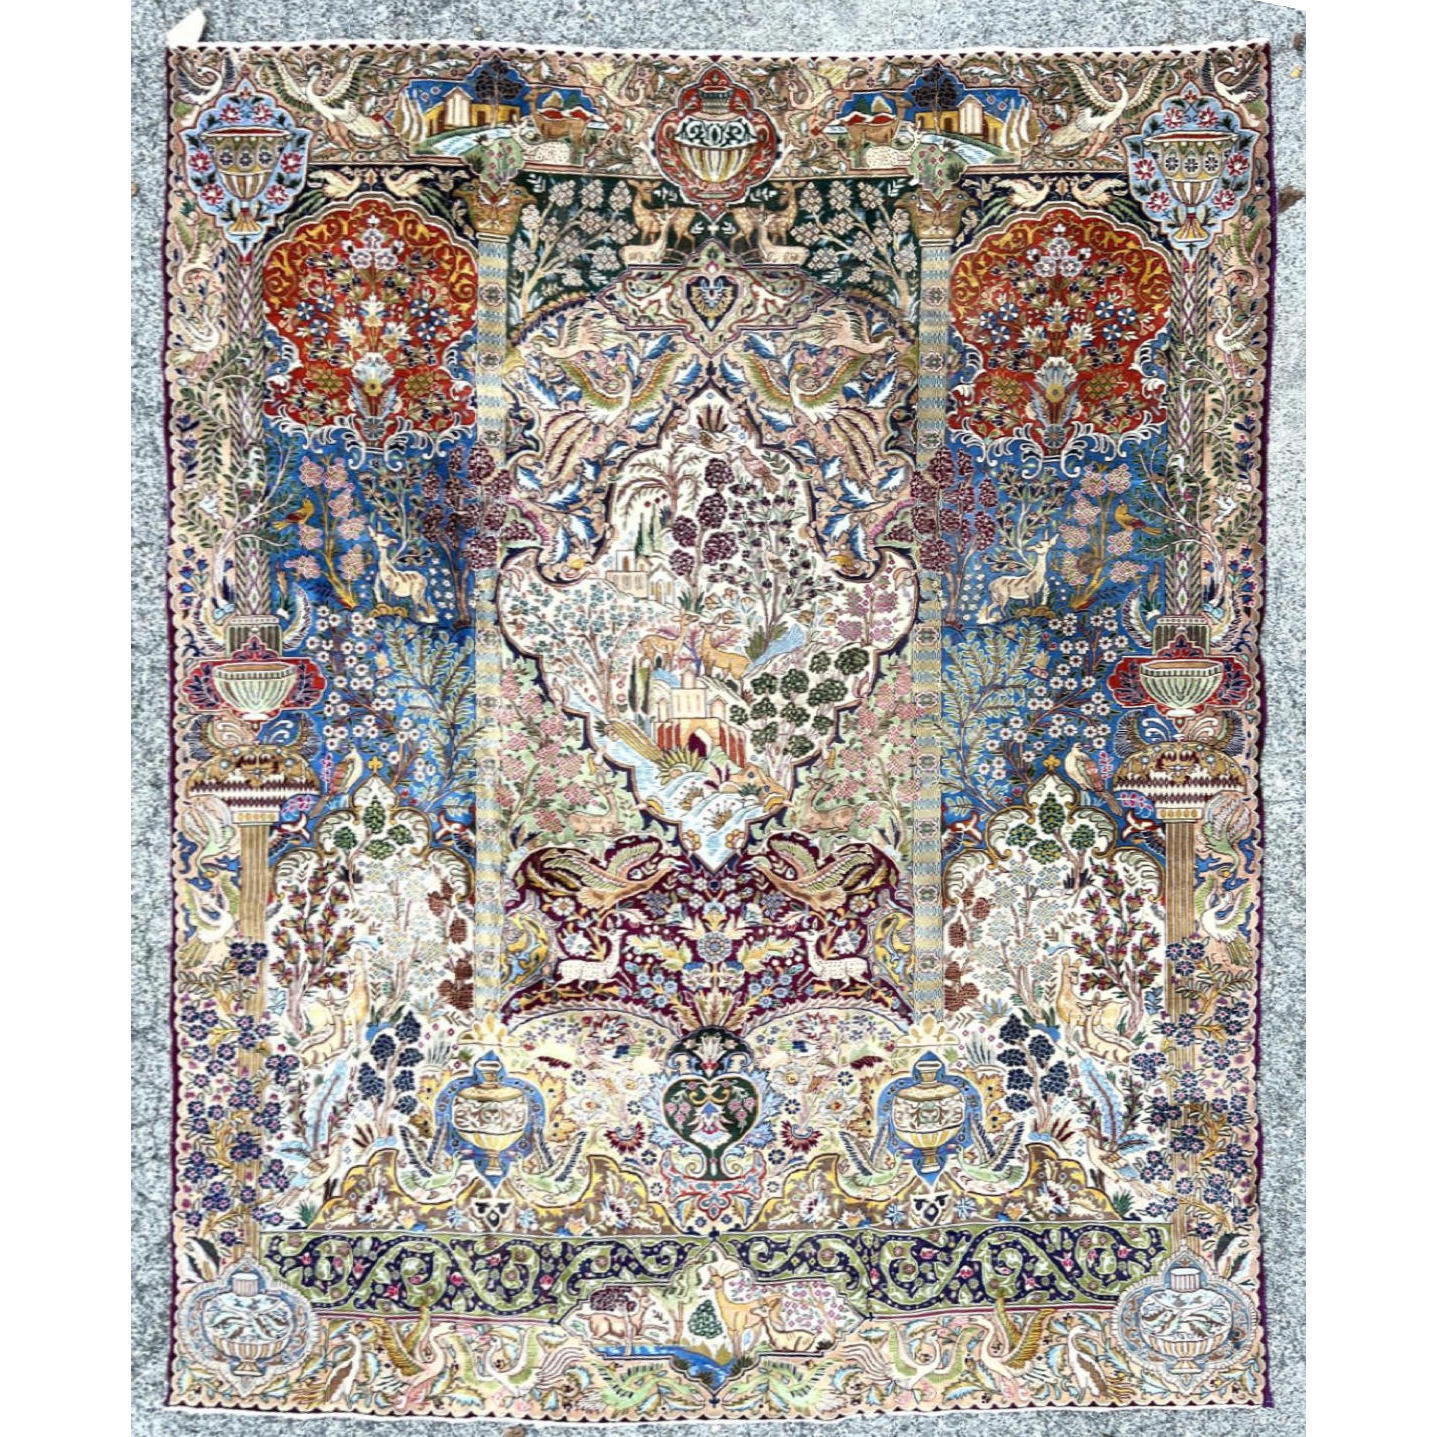 12'9 x 9'8 Handmade Oriental Carpet